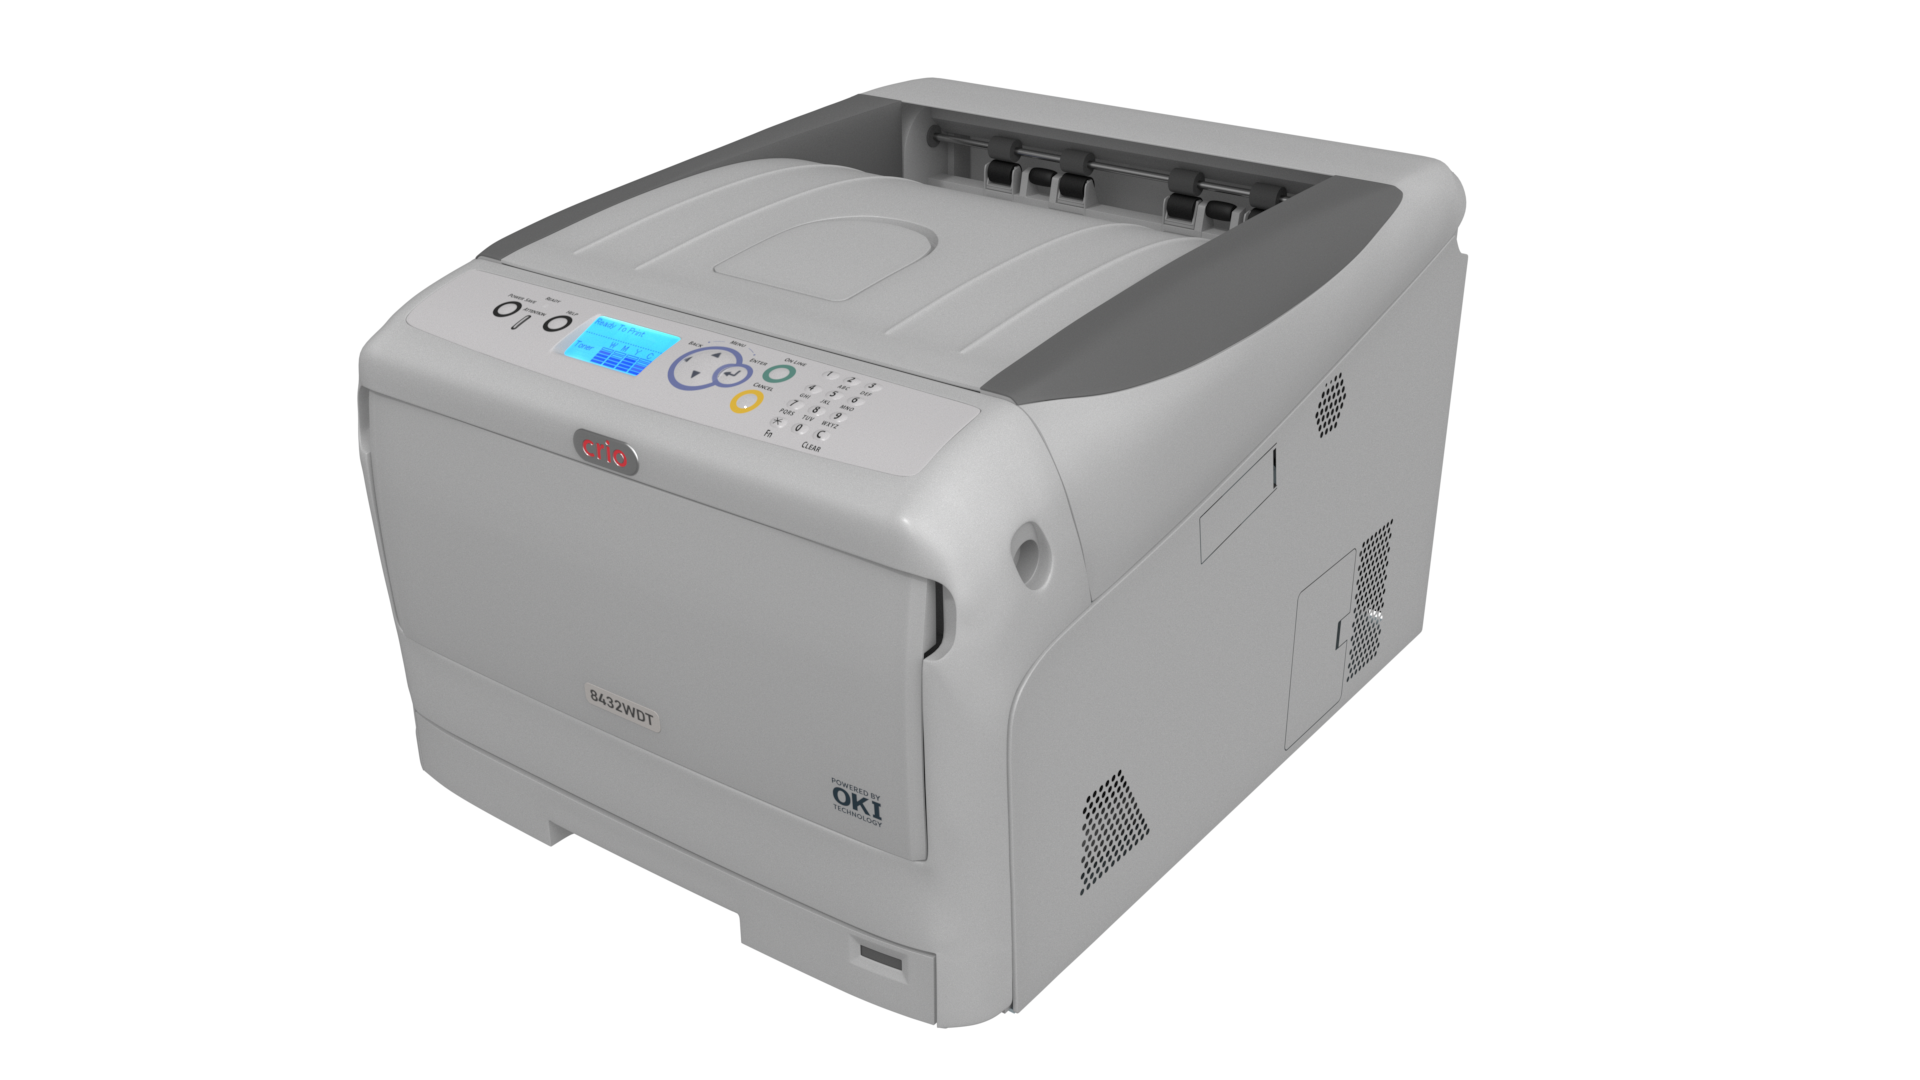 Okidata Pro 8432WT Digital Transfer Printer – Image Control Systems NW